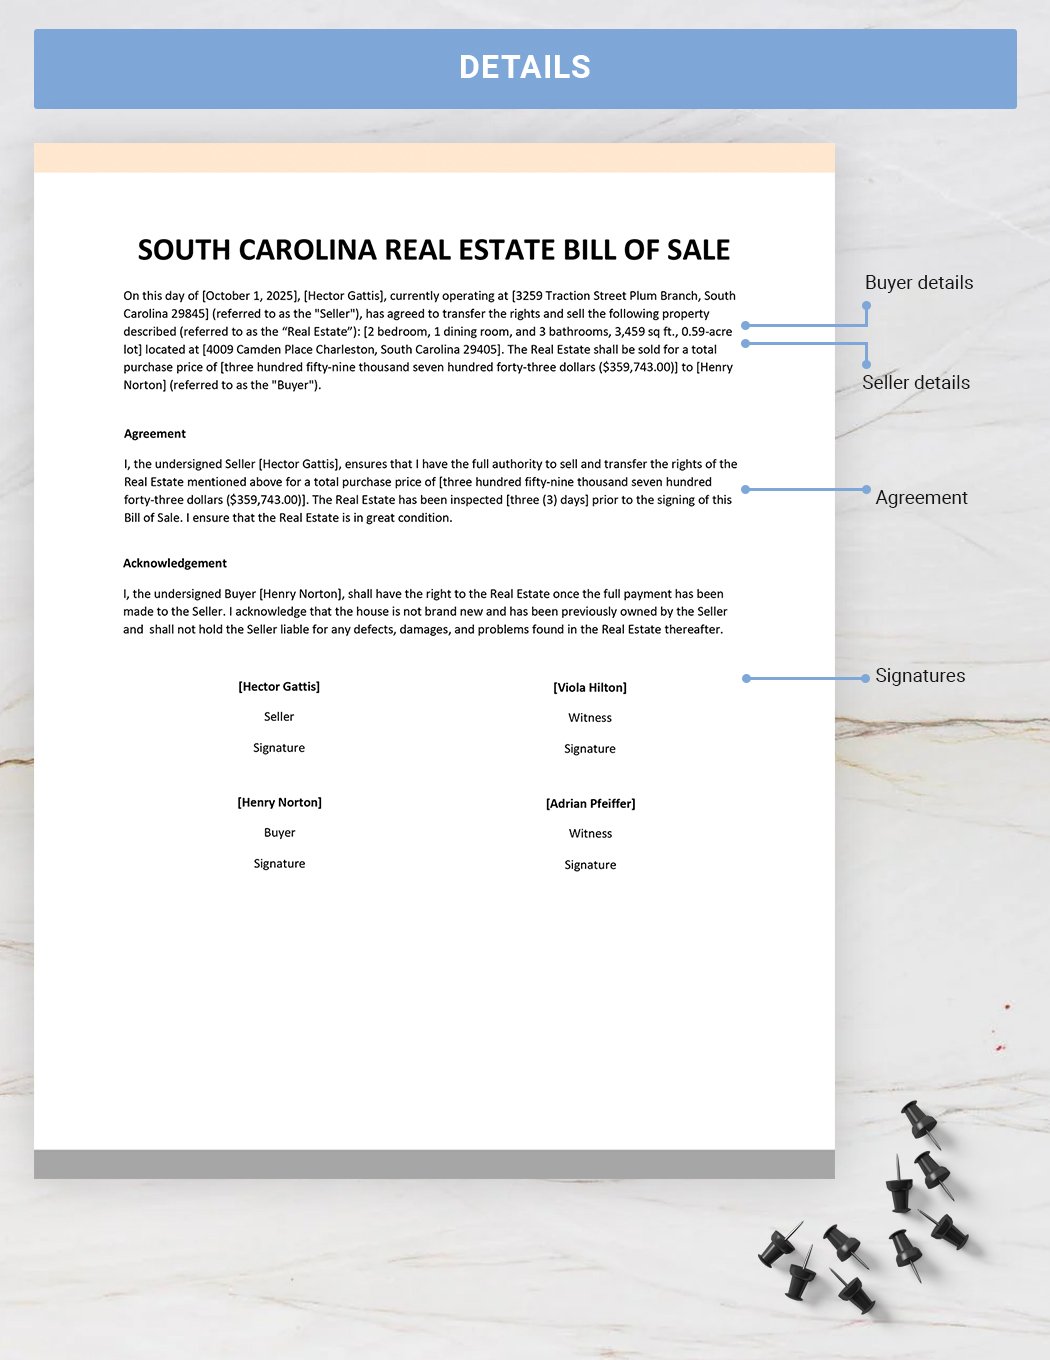 South Carolina Real Estate Bill of Sale Template